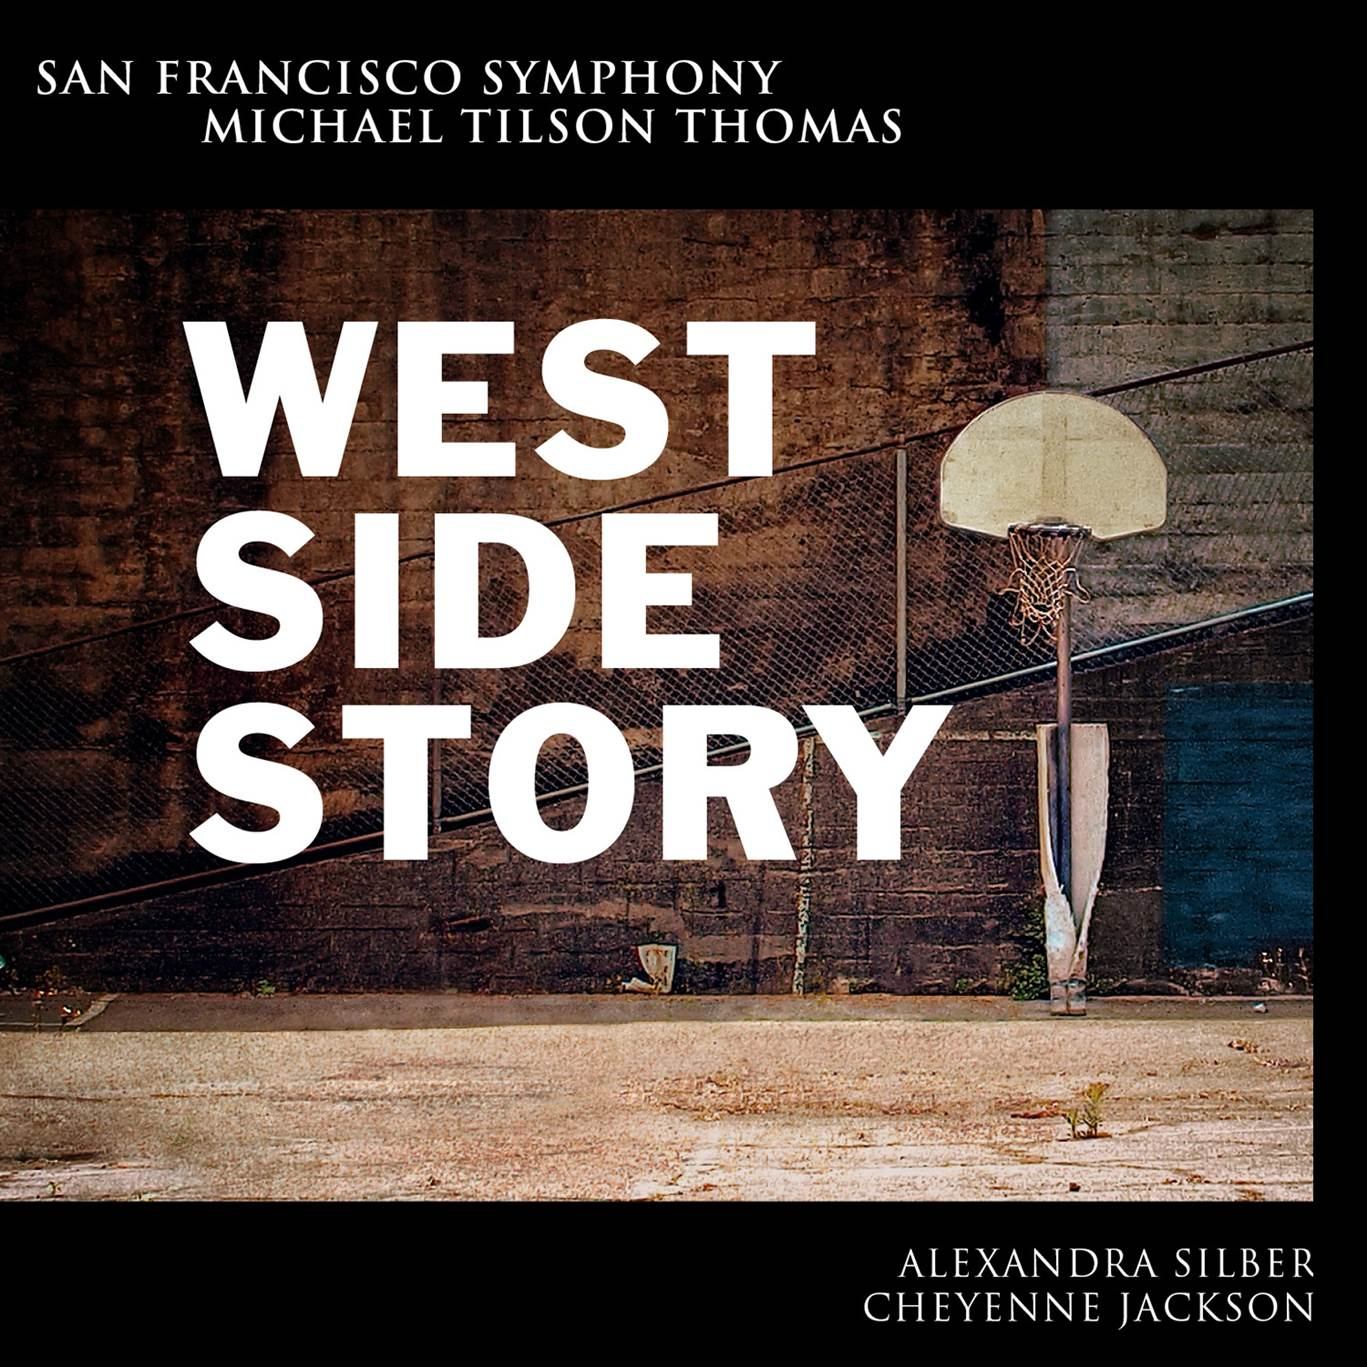 Details about   1990 newspaper w DEATH of musical composer LEONARD BERNSTEIN "West Side Story"